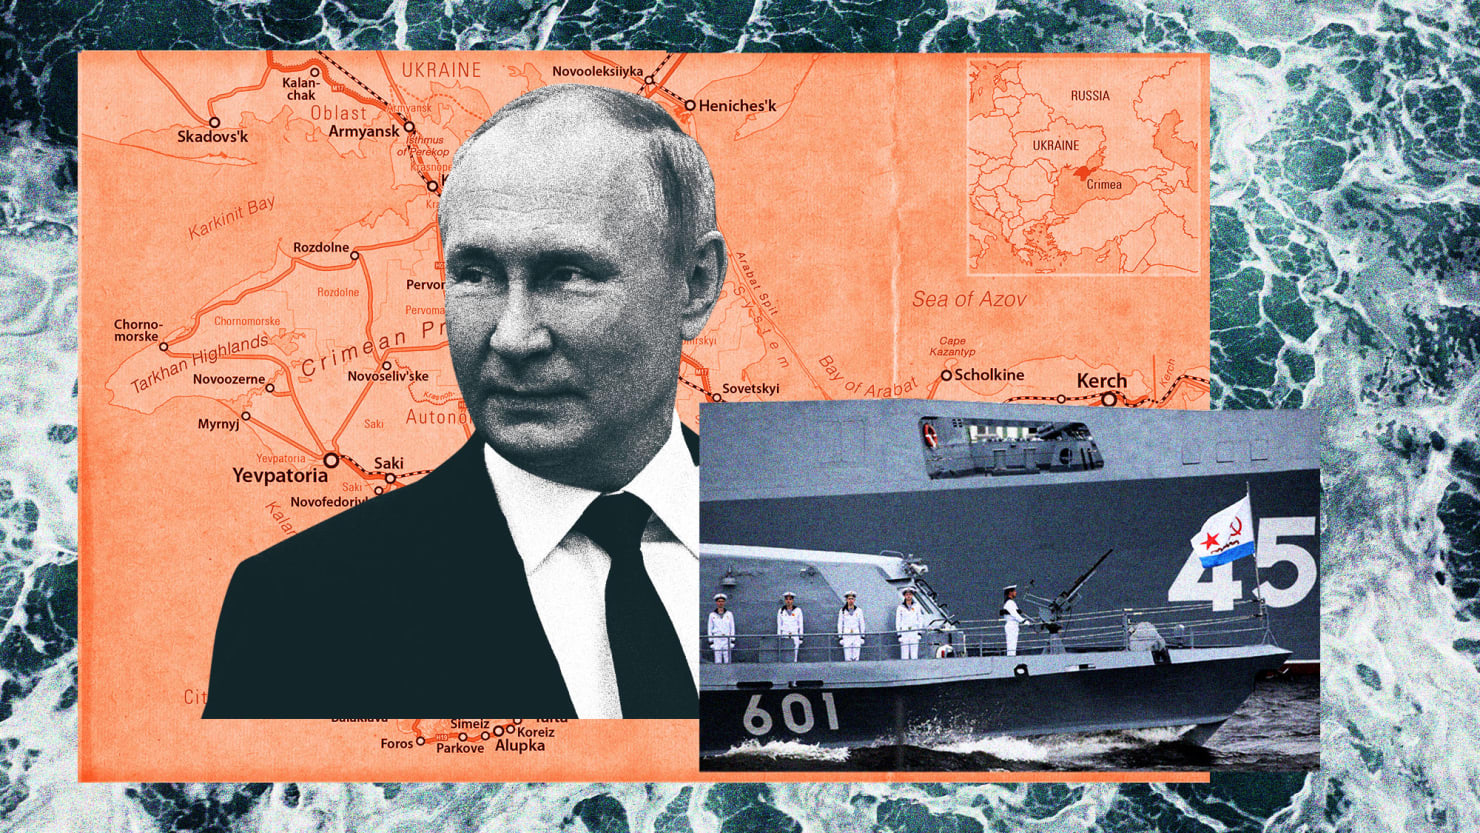 La armada ‘feroz’ de Putin se escondió después de un ataque devastador